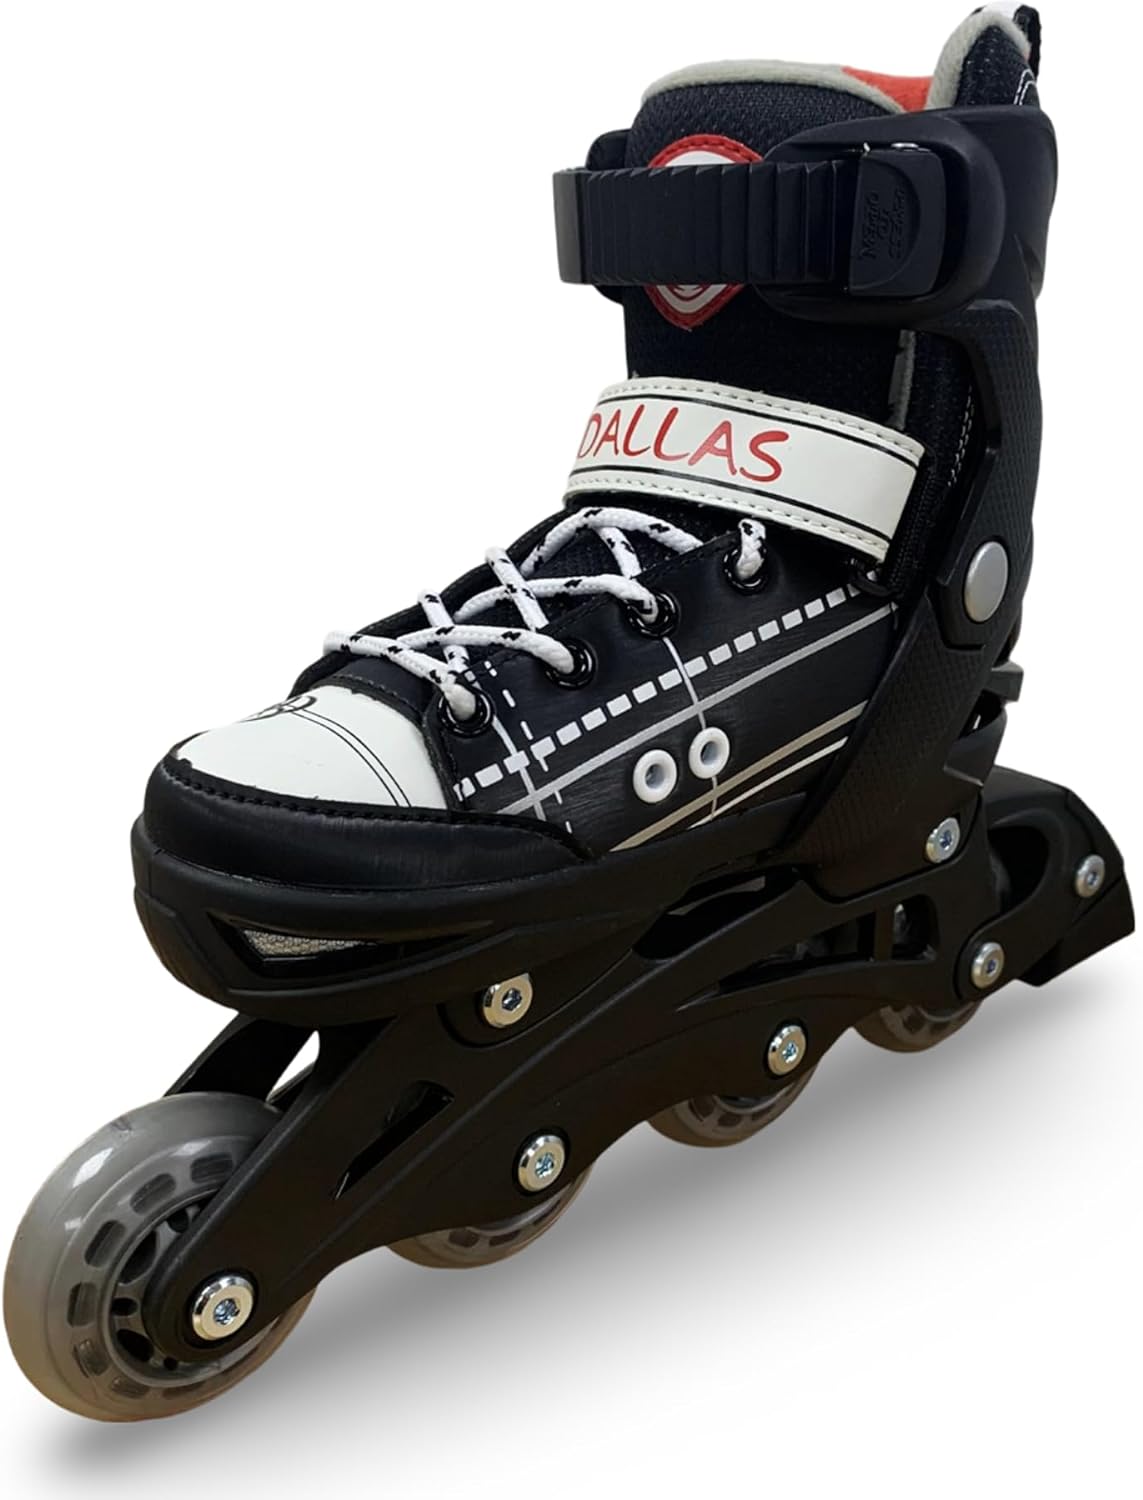 Kingdom GB Dallas Inline Skates Roller Blades Childrens Kids Junior Boys Girls Adjustable Size